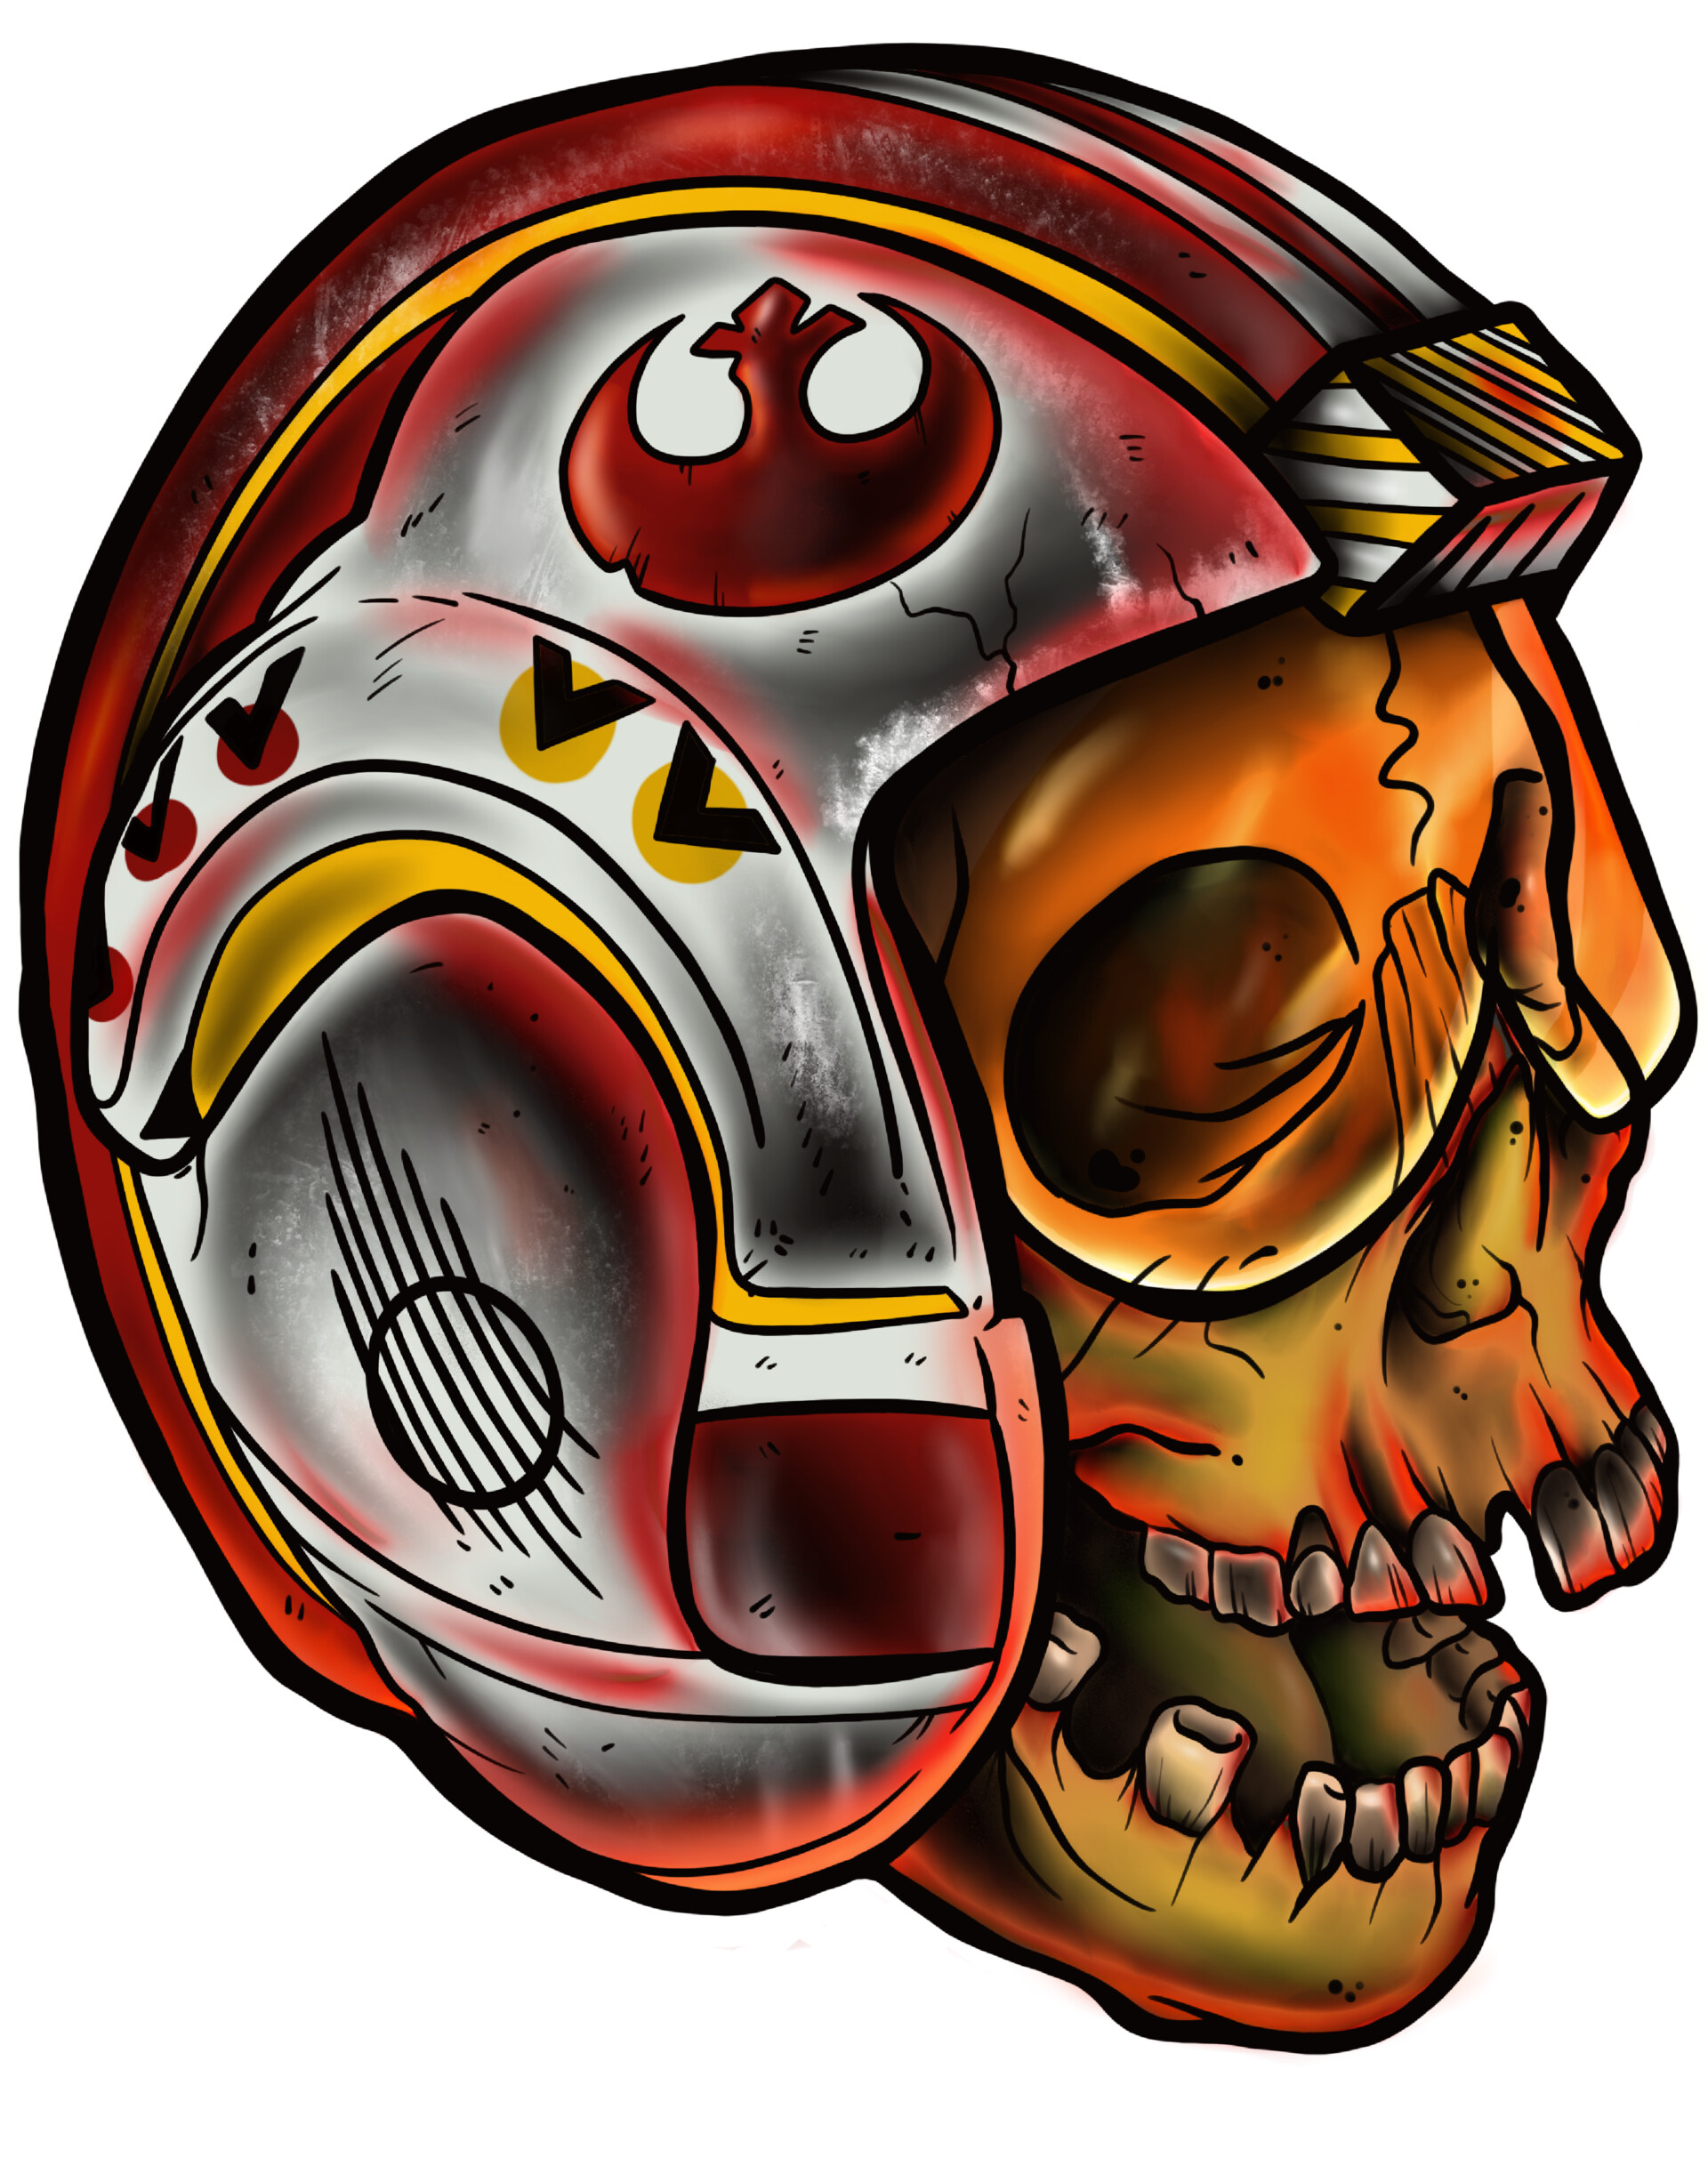 COREY BLAU - Rebel Star Wars Skull Helmet - Tattoo Style Illustration